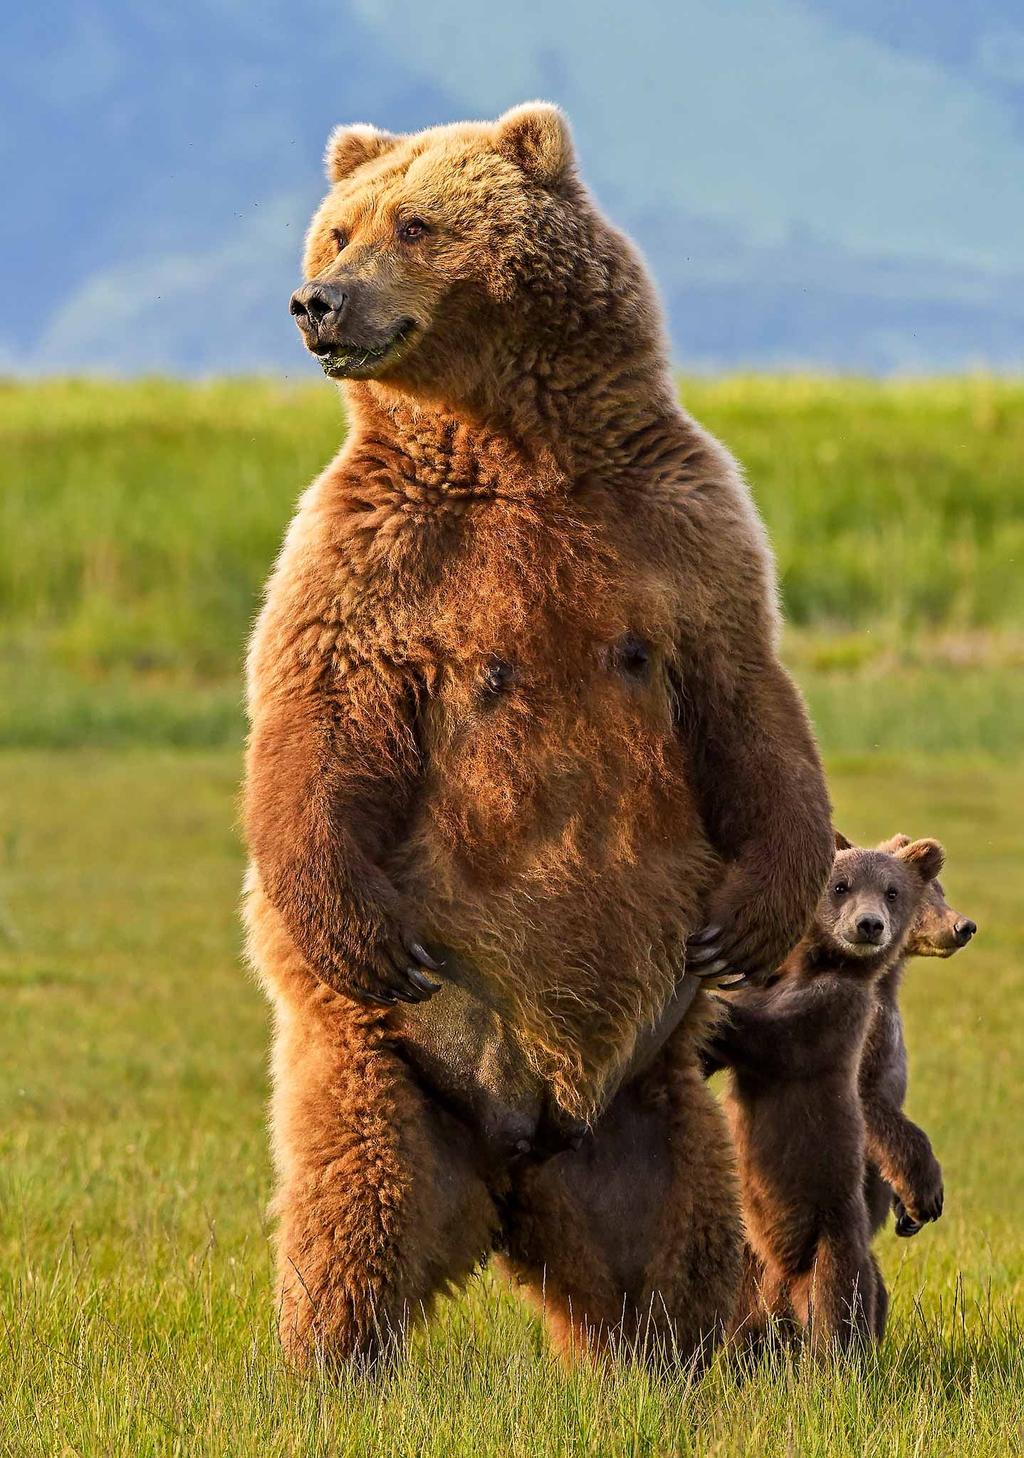 Bears of Katmai - A Photo Expedition with Barbara Eddy Aug 28 - Sept 3, 2019 7 days/6 nights -